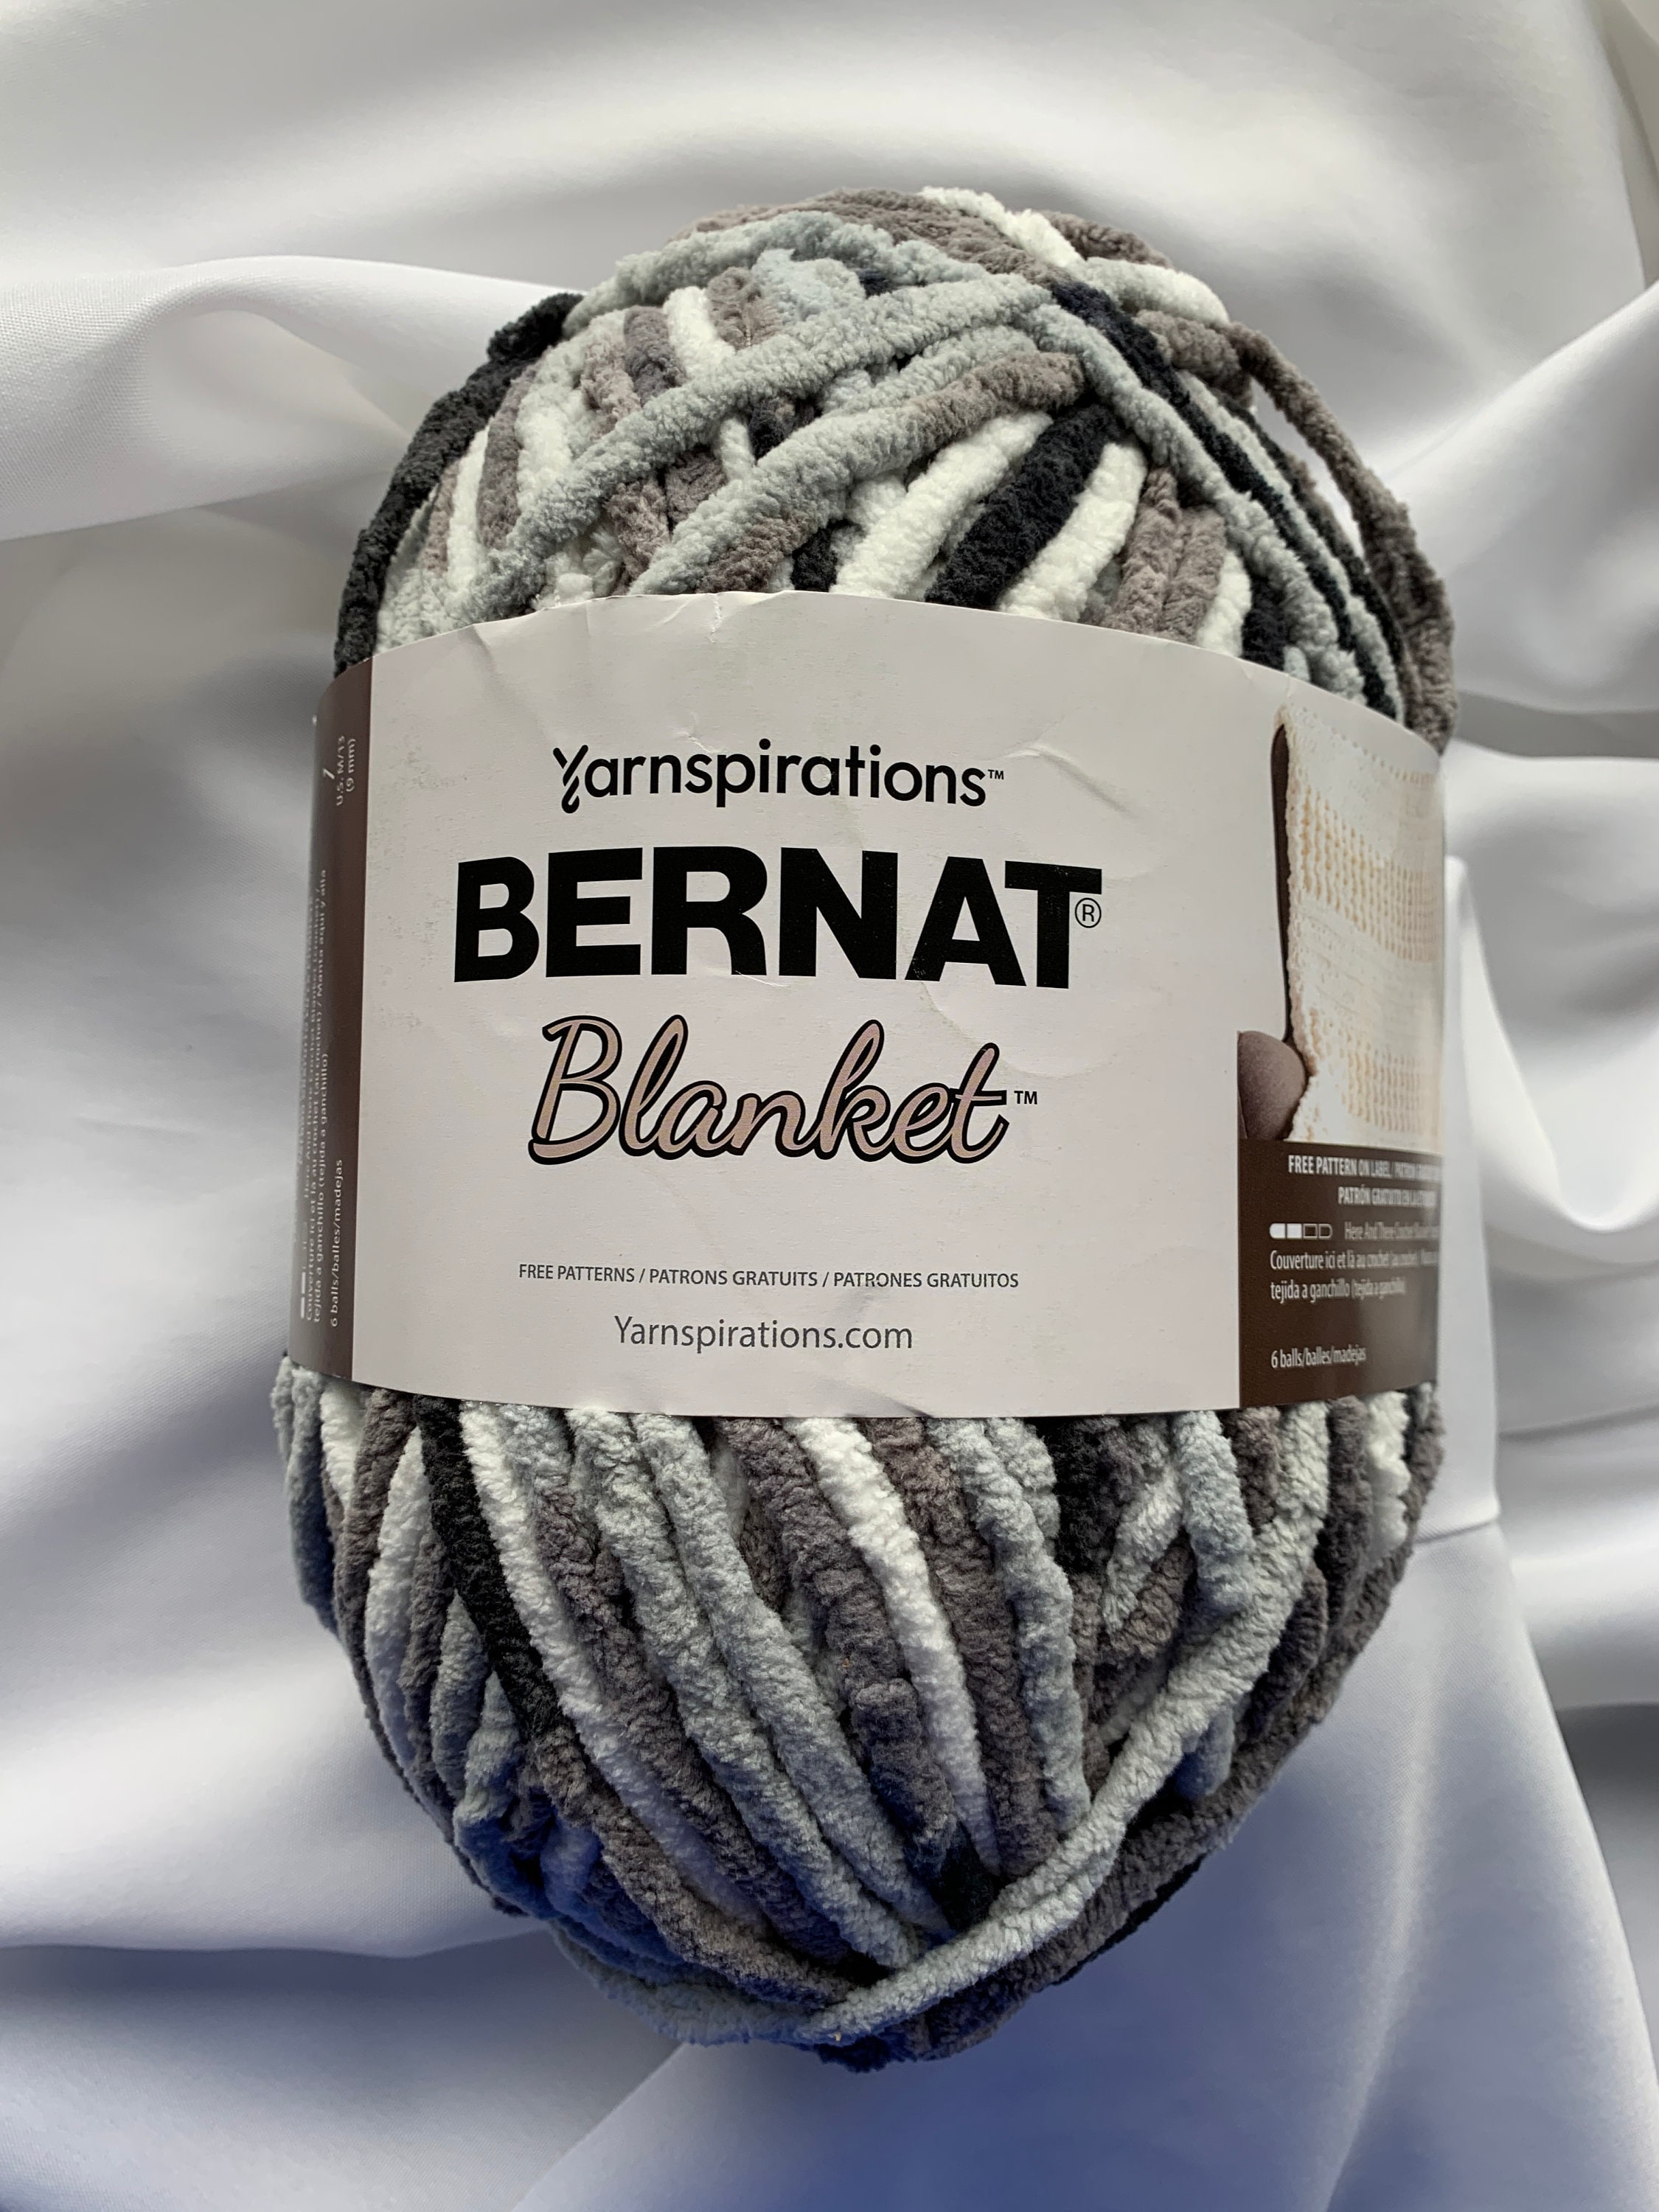 Lot of 4 - Yarnspirations Bernat Blanket Brights Yarn, 10.5oz 220yds -  Dutch Goat